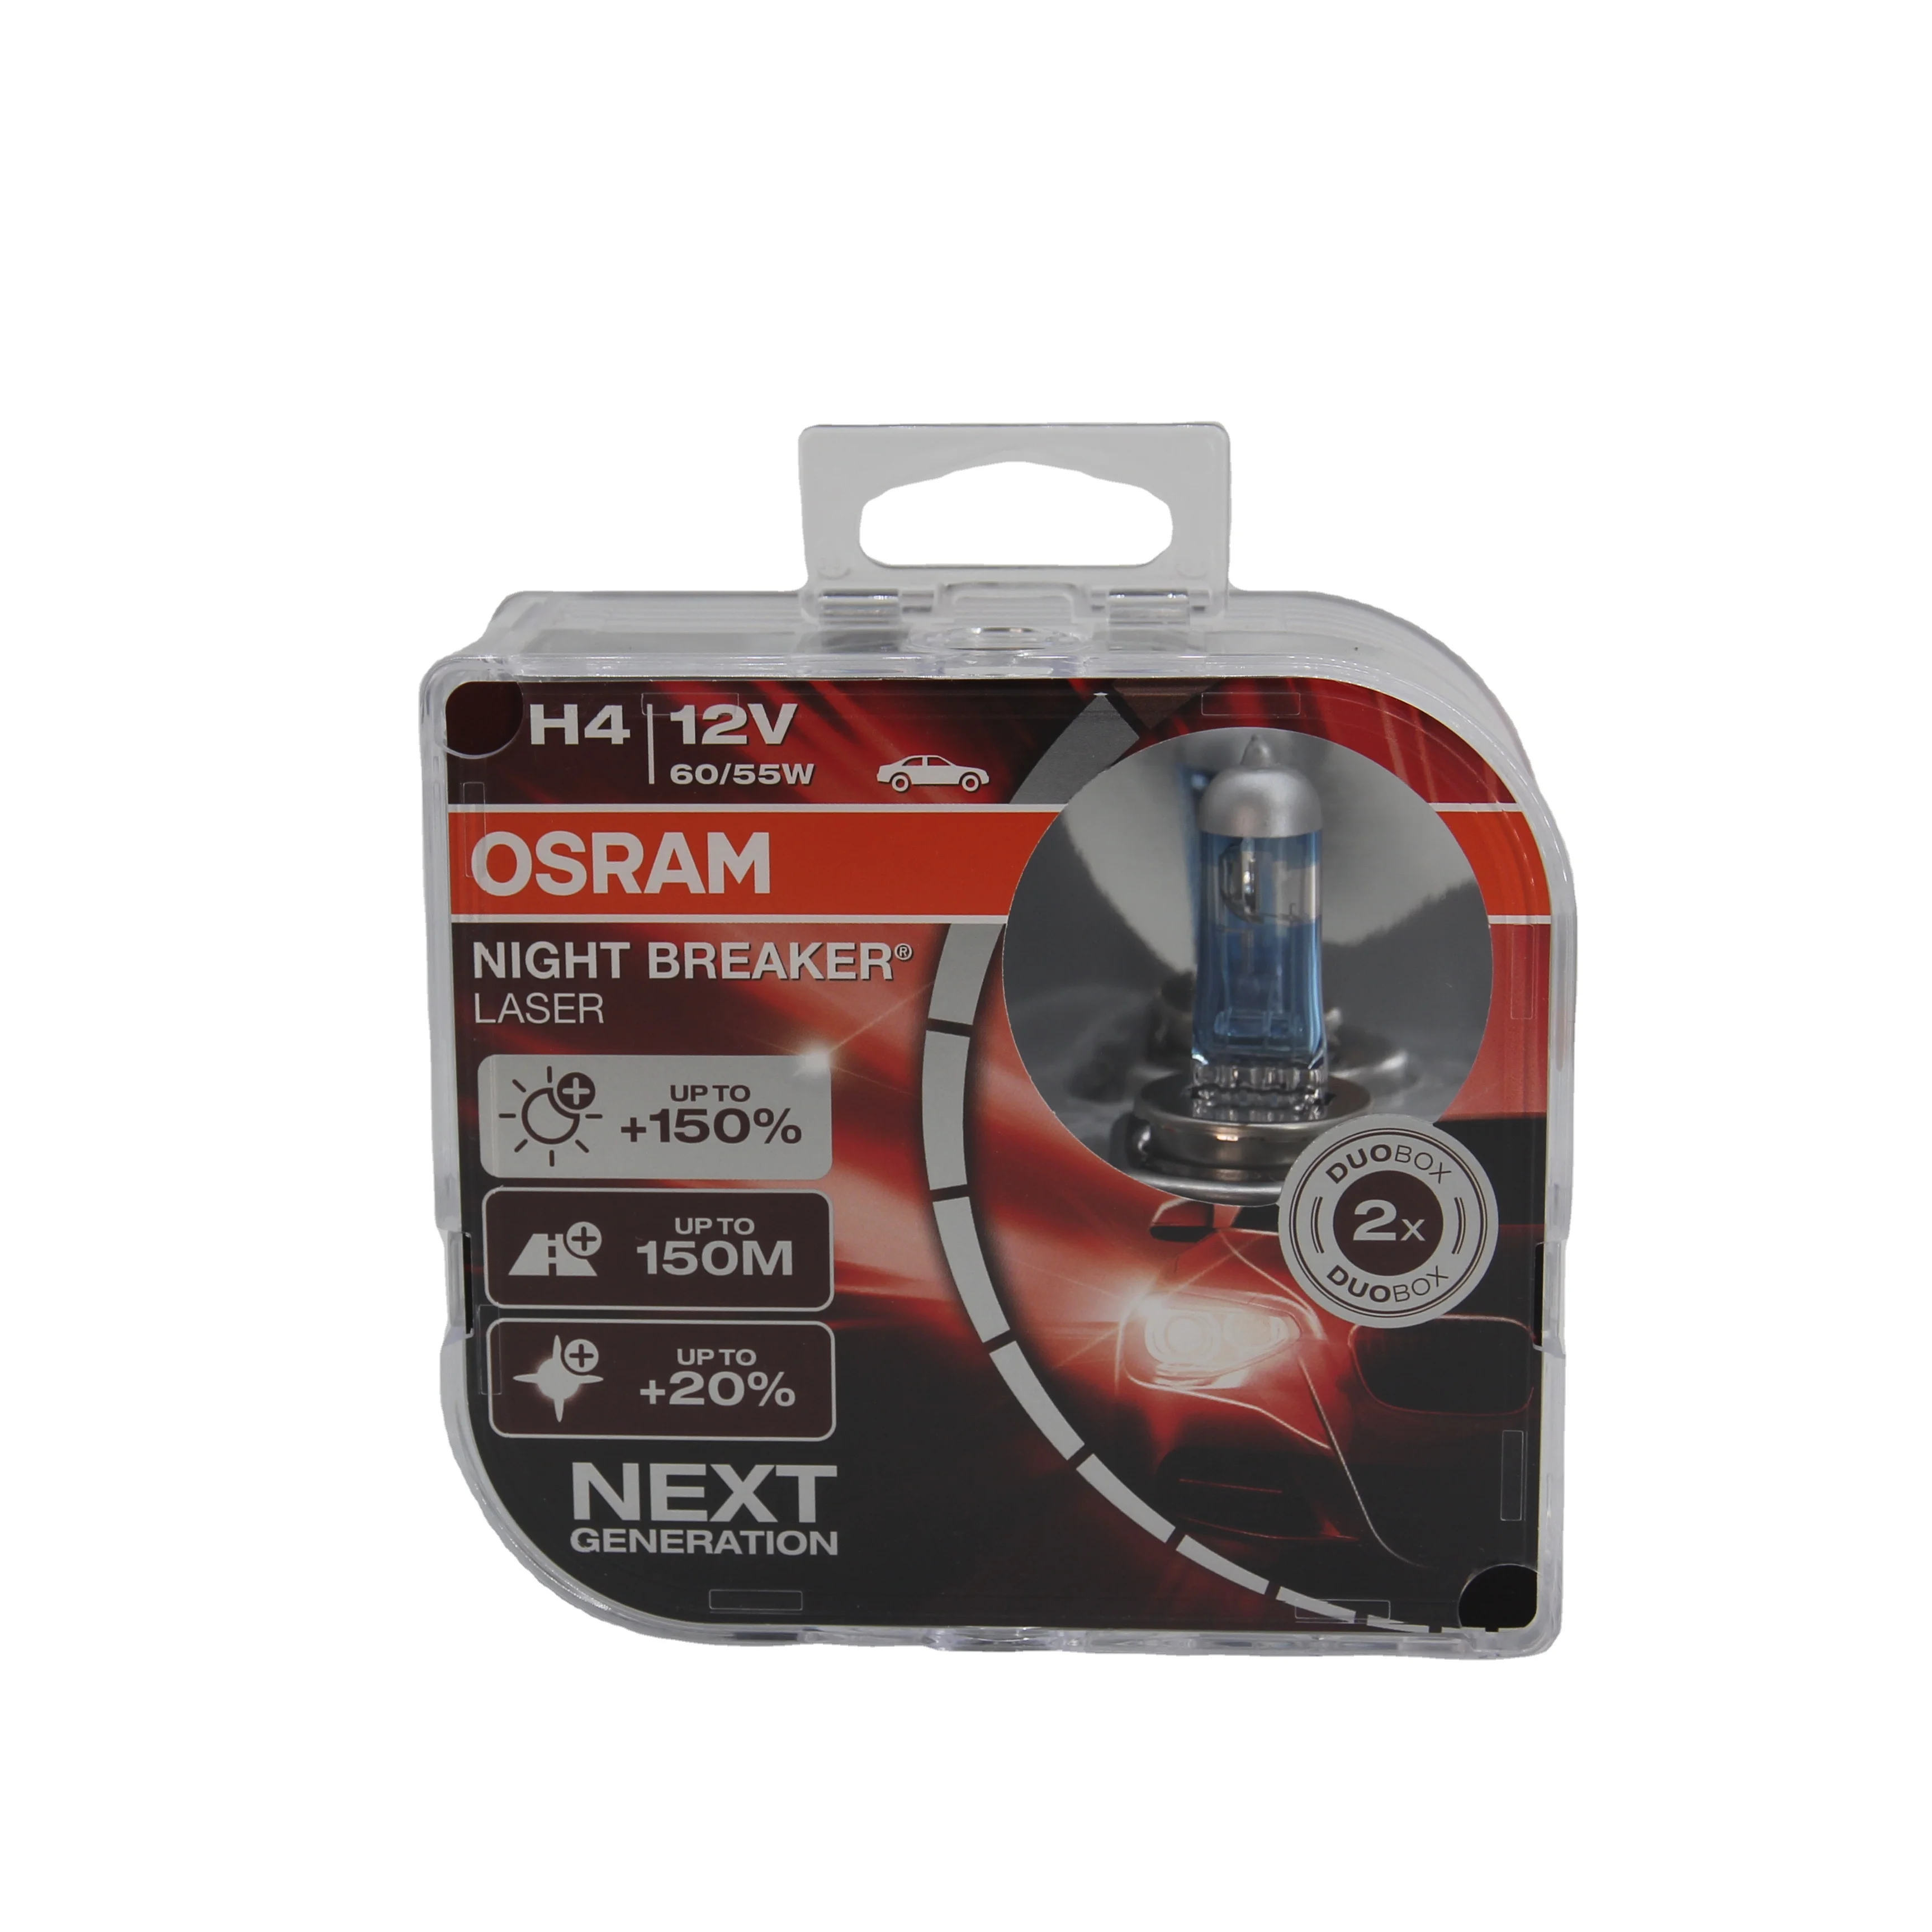 OSRAM H4 Night Breaker Laser 200 Headlight Bulb, 60/55W, 3900K